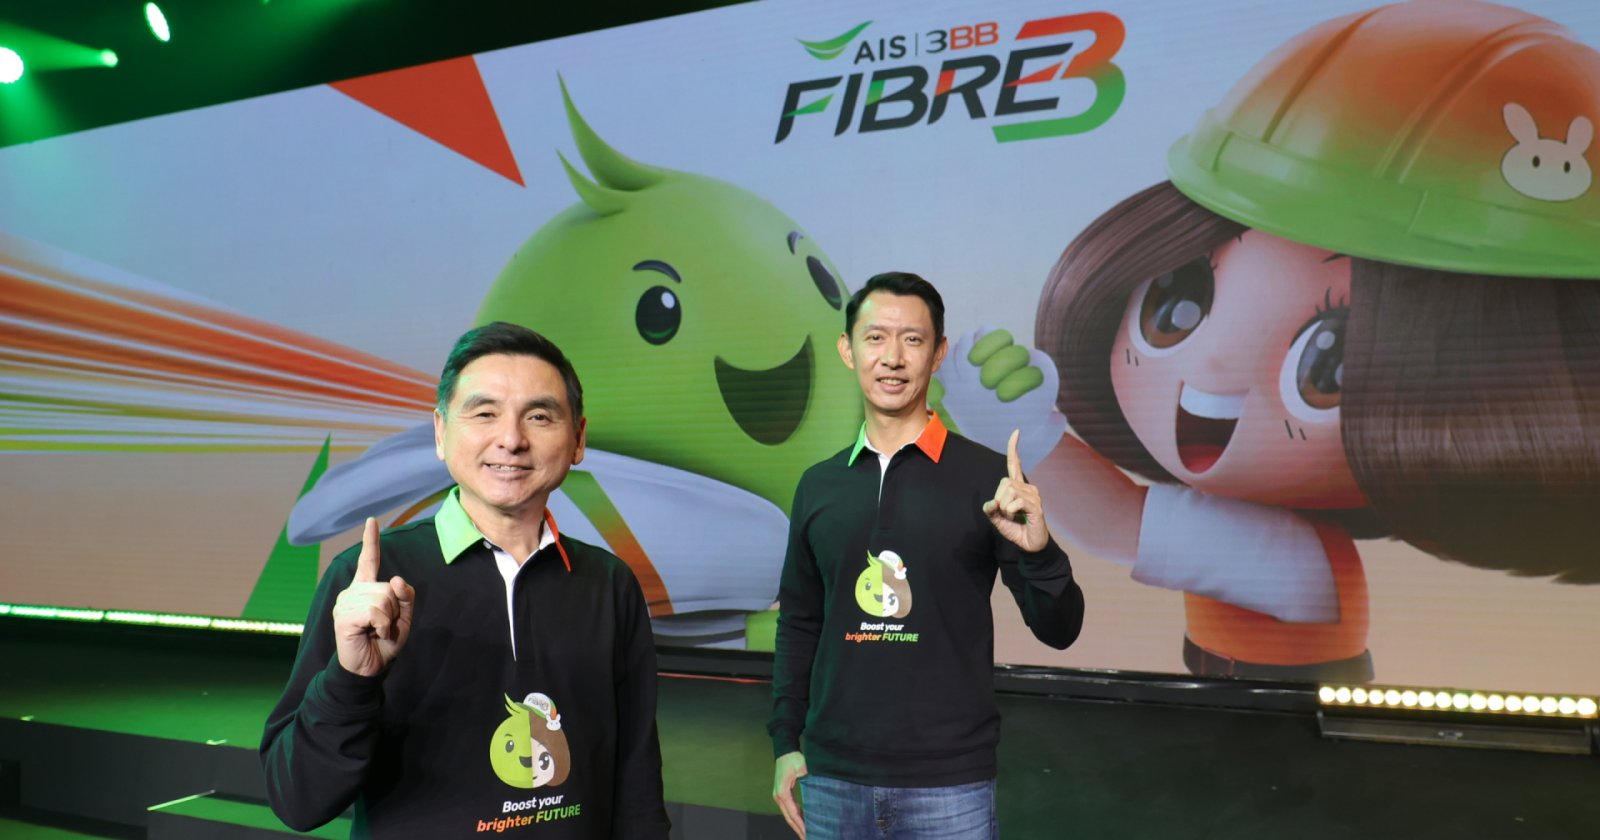 AIS – 3BB FIBRE 3 ชื่อใหม่หลังรวมกิจการ 3BB พร้อมยกระดับคุณภาพอินเทอร์เน็ตประเทศไทย